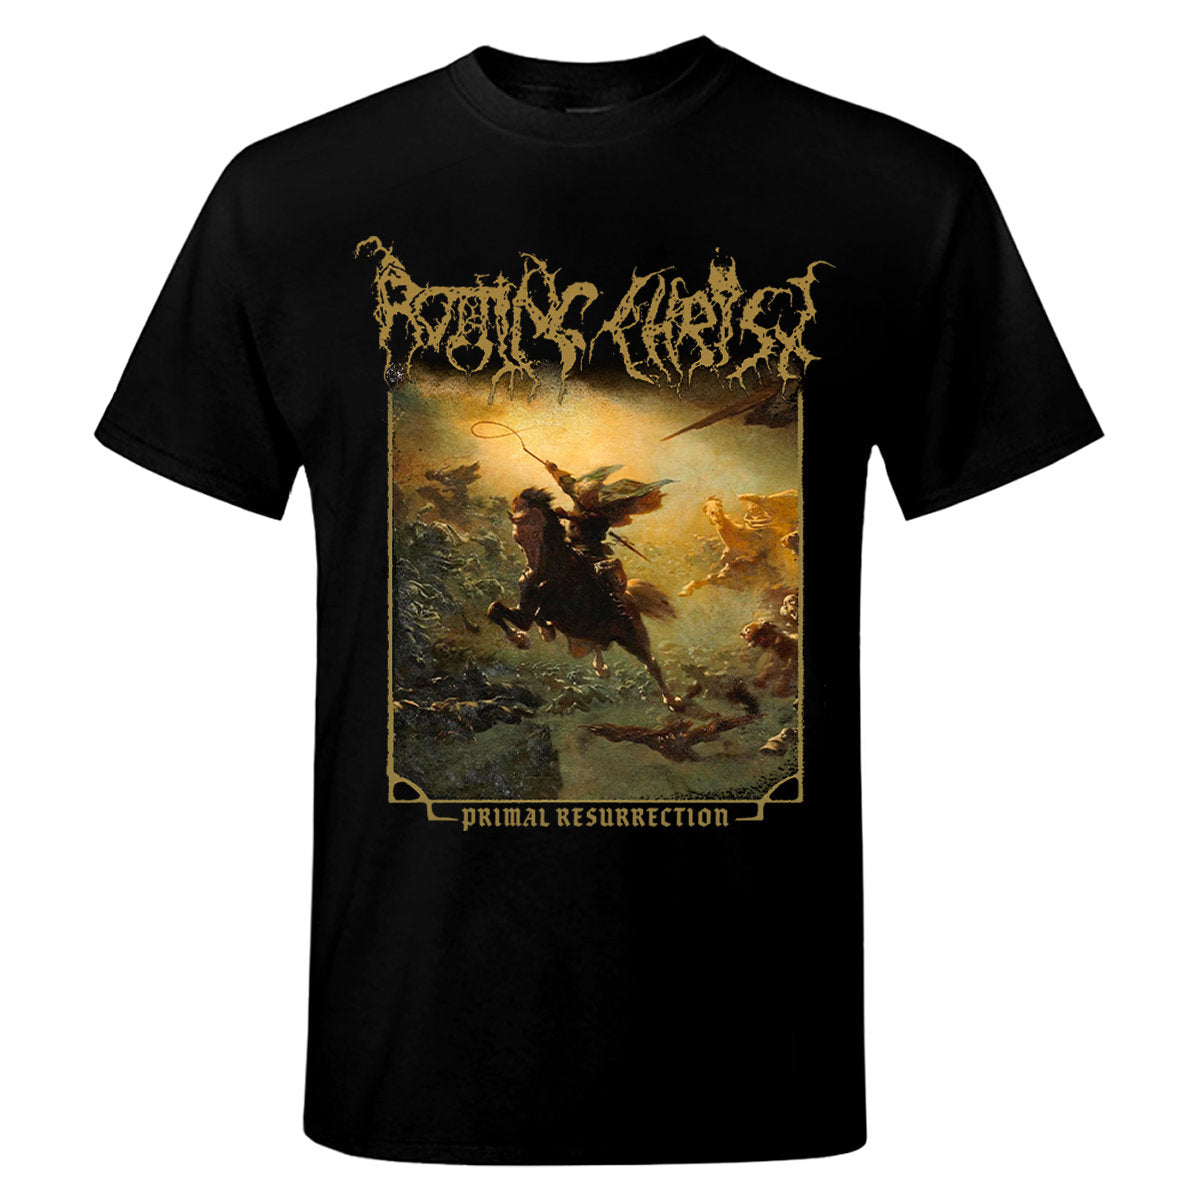 Rotting Christ "Primal Resurrection" T shirt